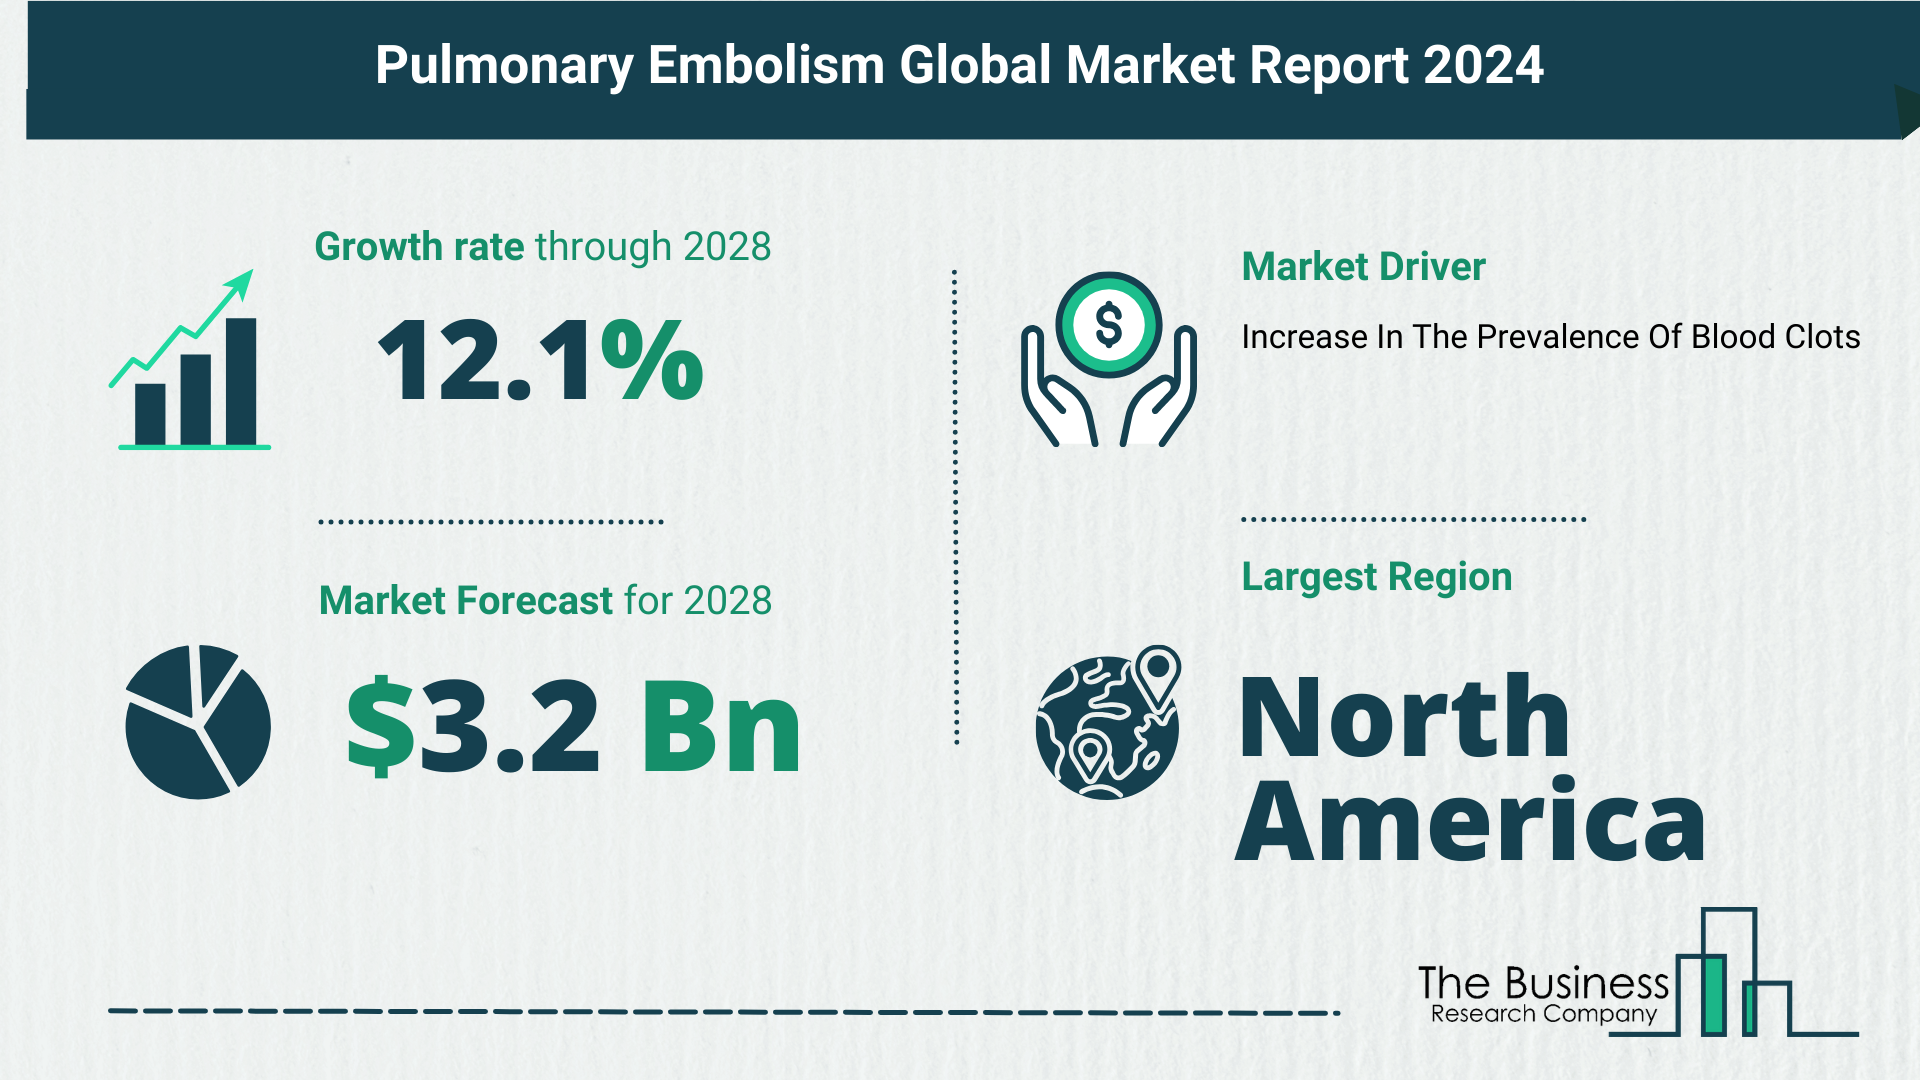 Global Pulmonary Embolism Market